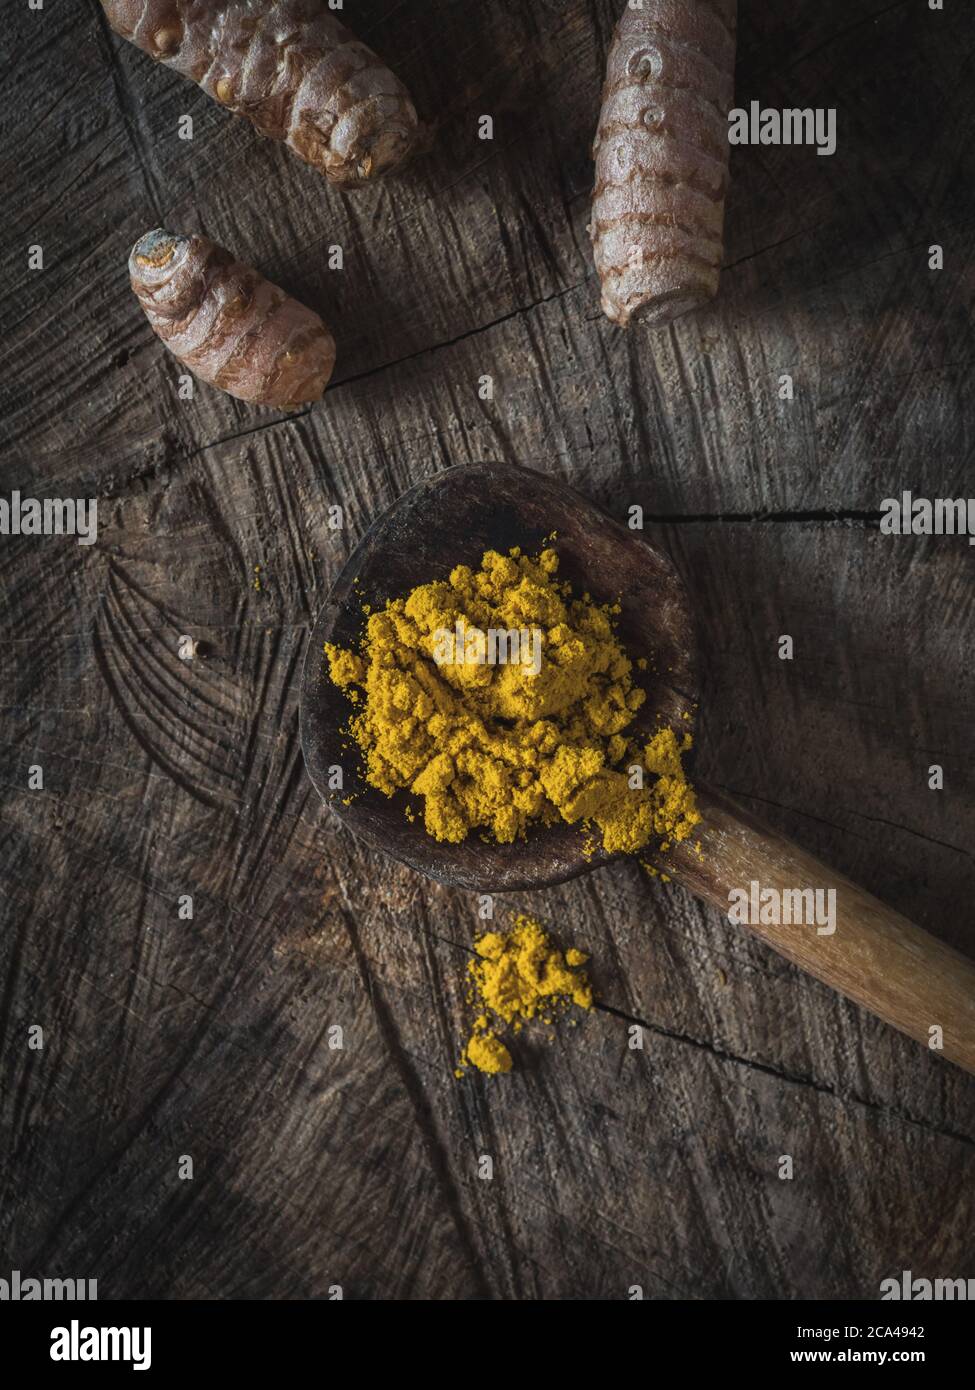 Turmeric (curcumin, Curcuma Longa Linn), powder and rhizome on wooden ladle and vintage wooden table. Overhead shot. Stock Photo